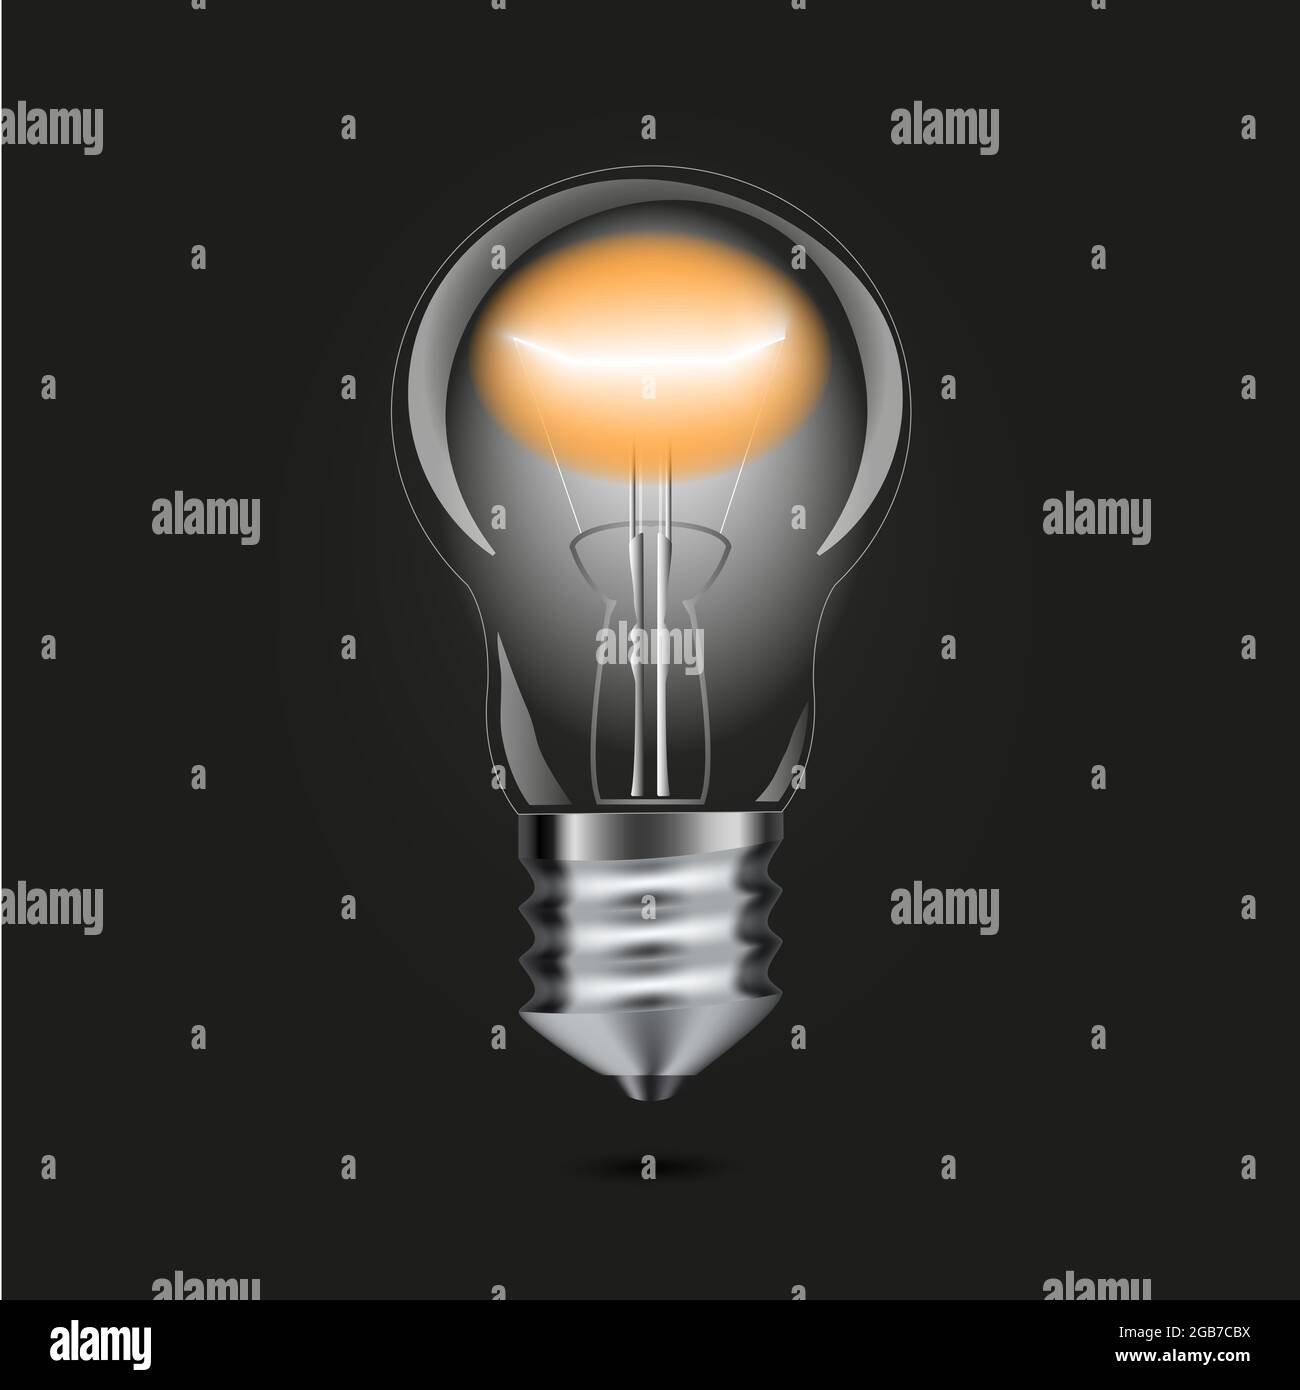 3d image, illustration. Realistic backlit incandescent lamp on a black background. Electricity. Stock Photo